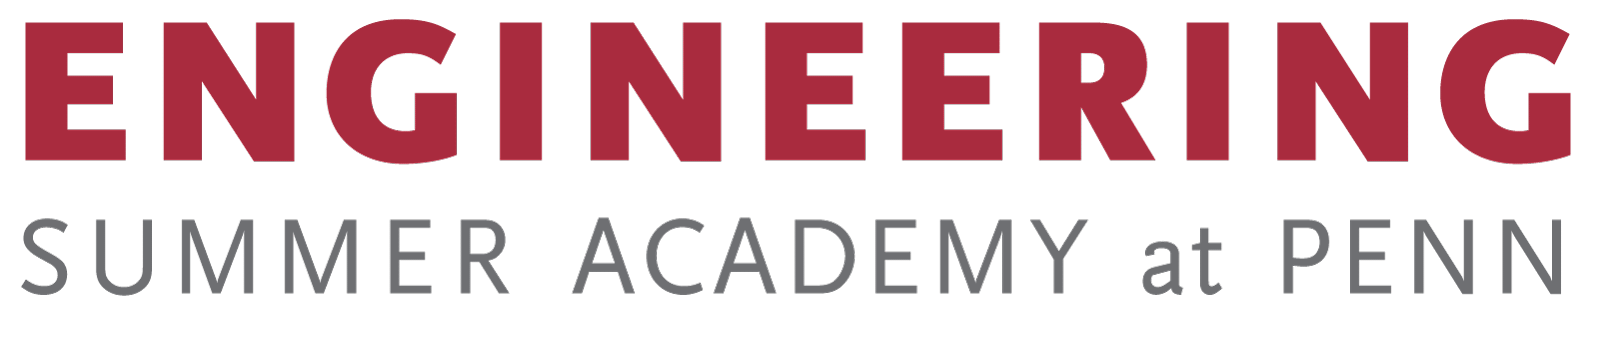 Design for Penn Engineering Summer Academy Logo